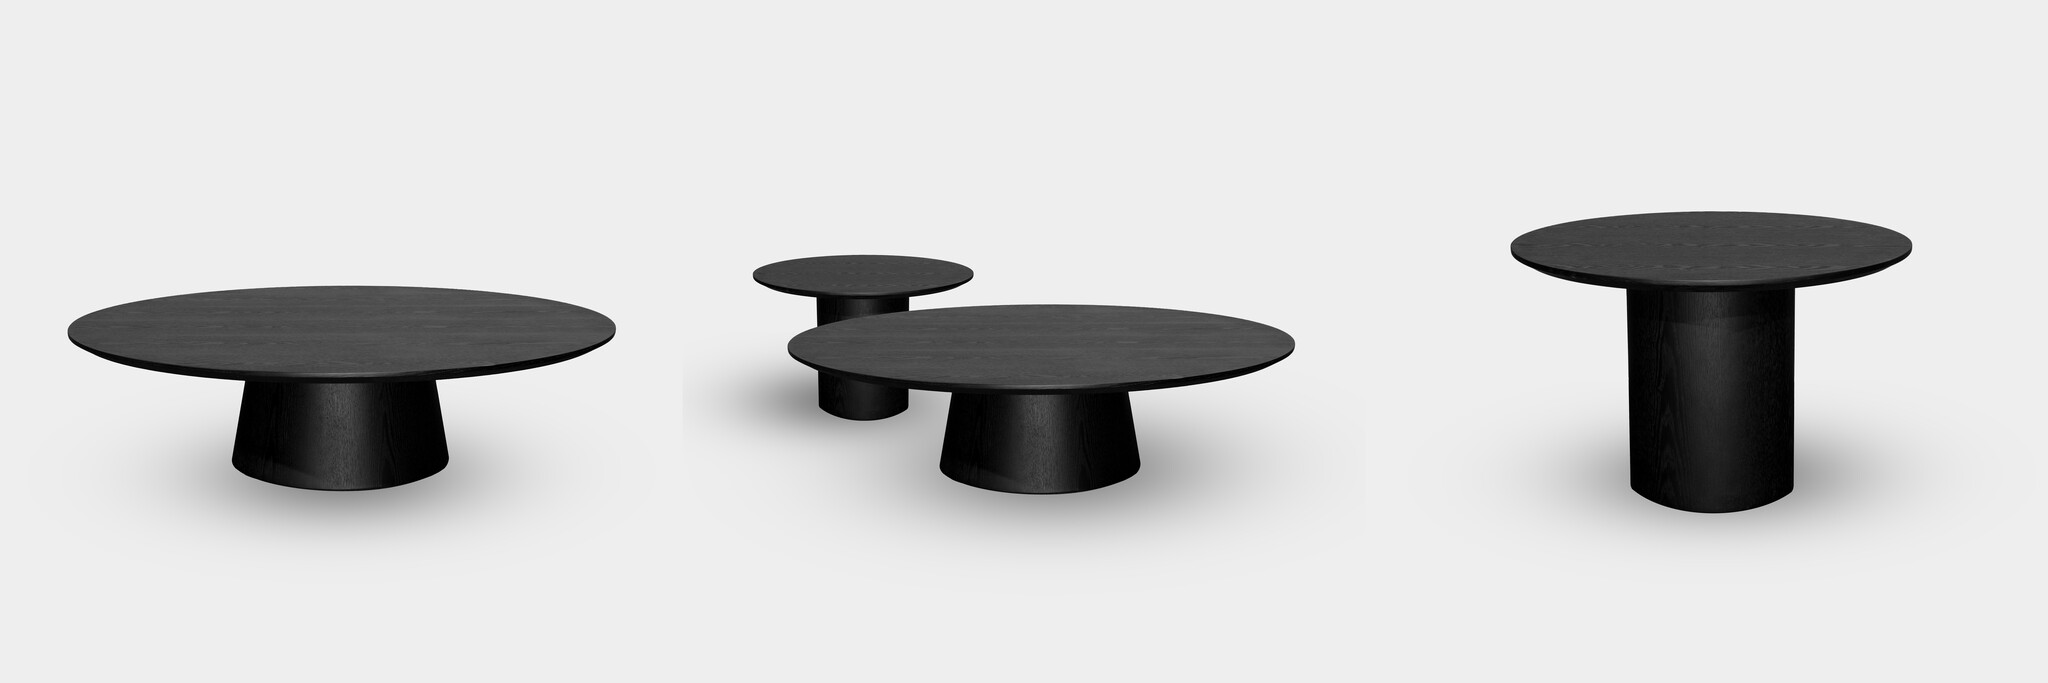 POSITANO coffee table 120cm - Copy-3